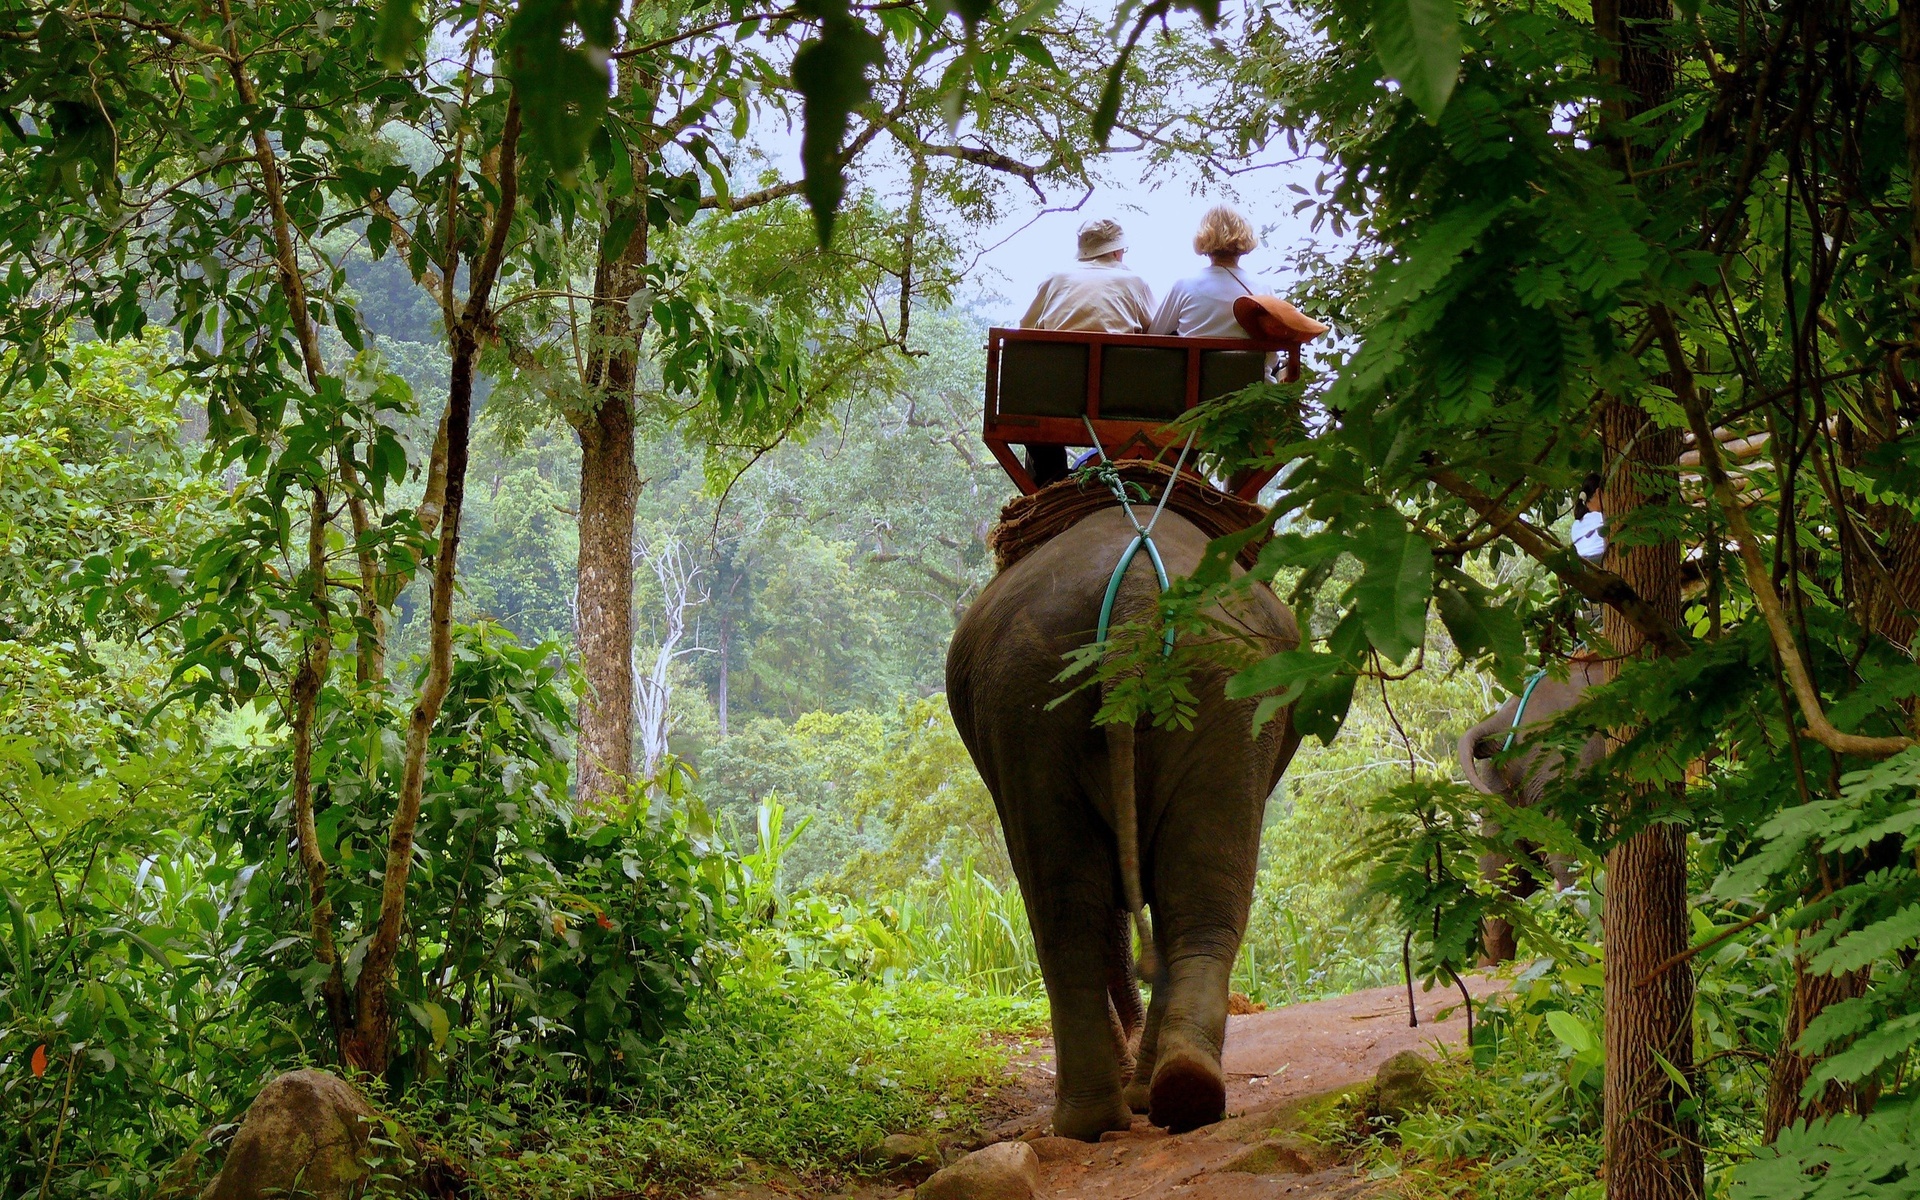 Animal Asian Elephant HD Wallpaper | Background Image